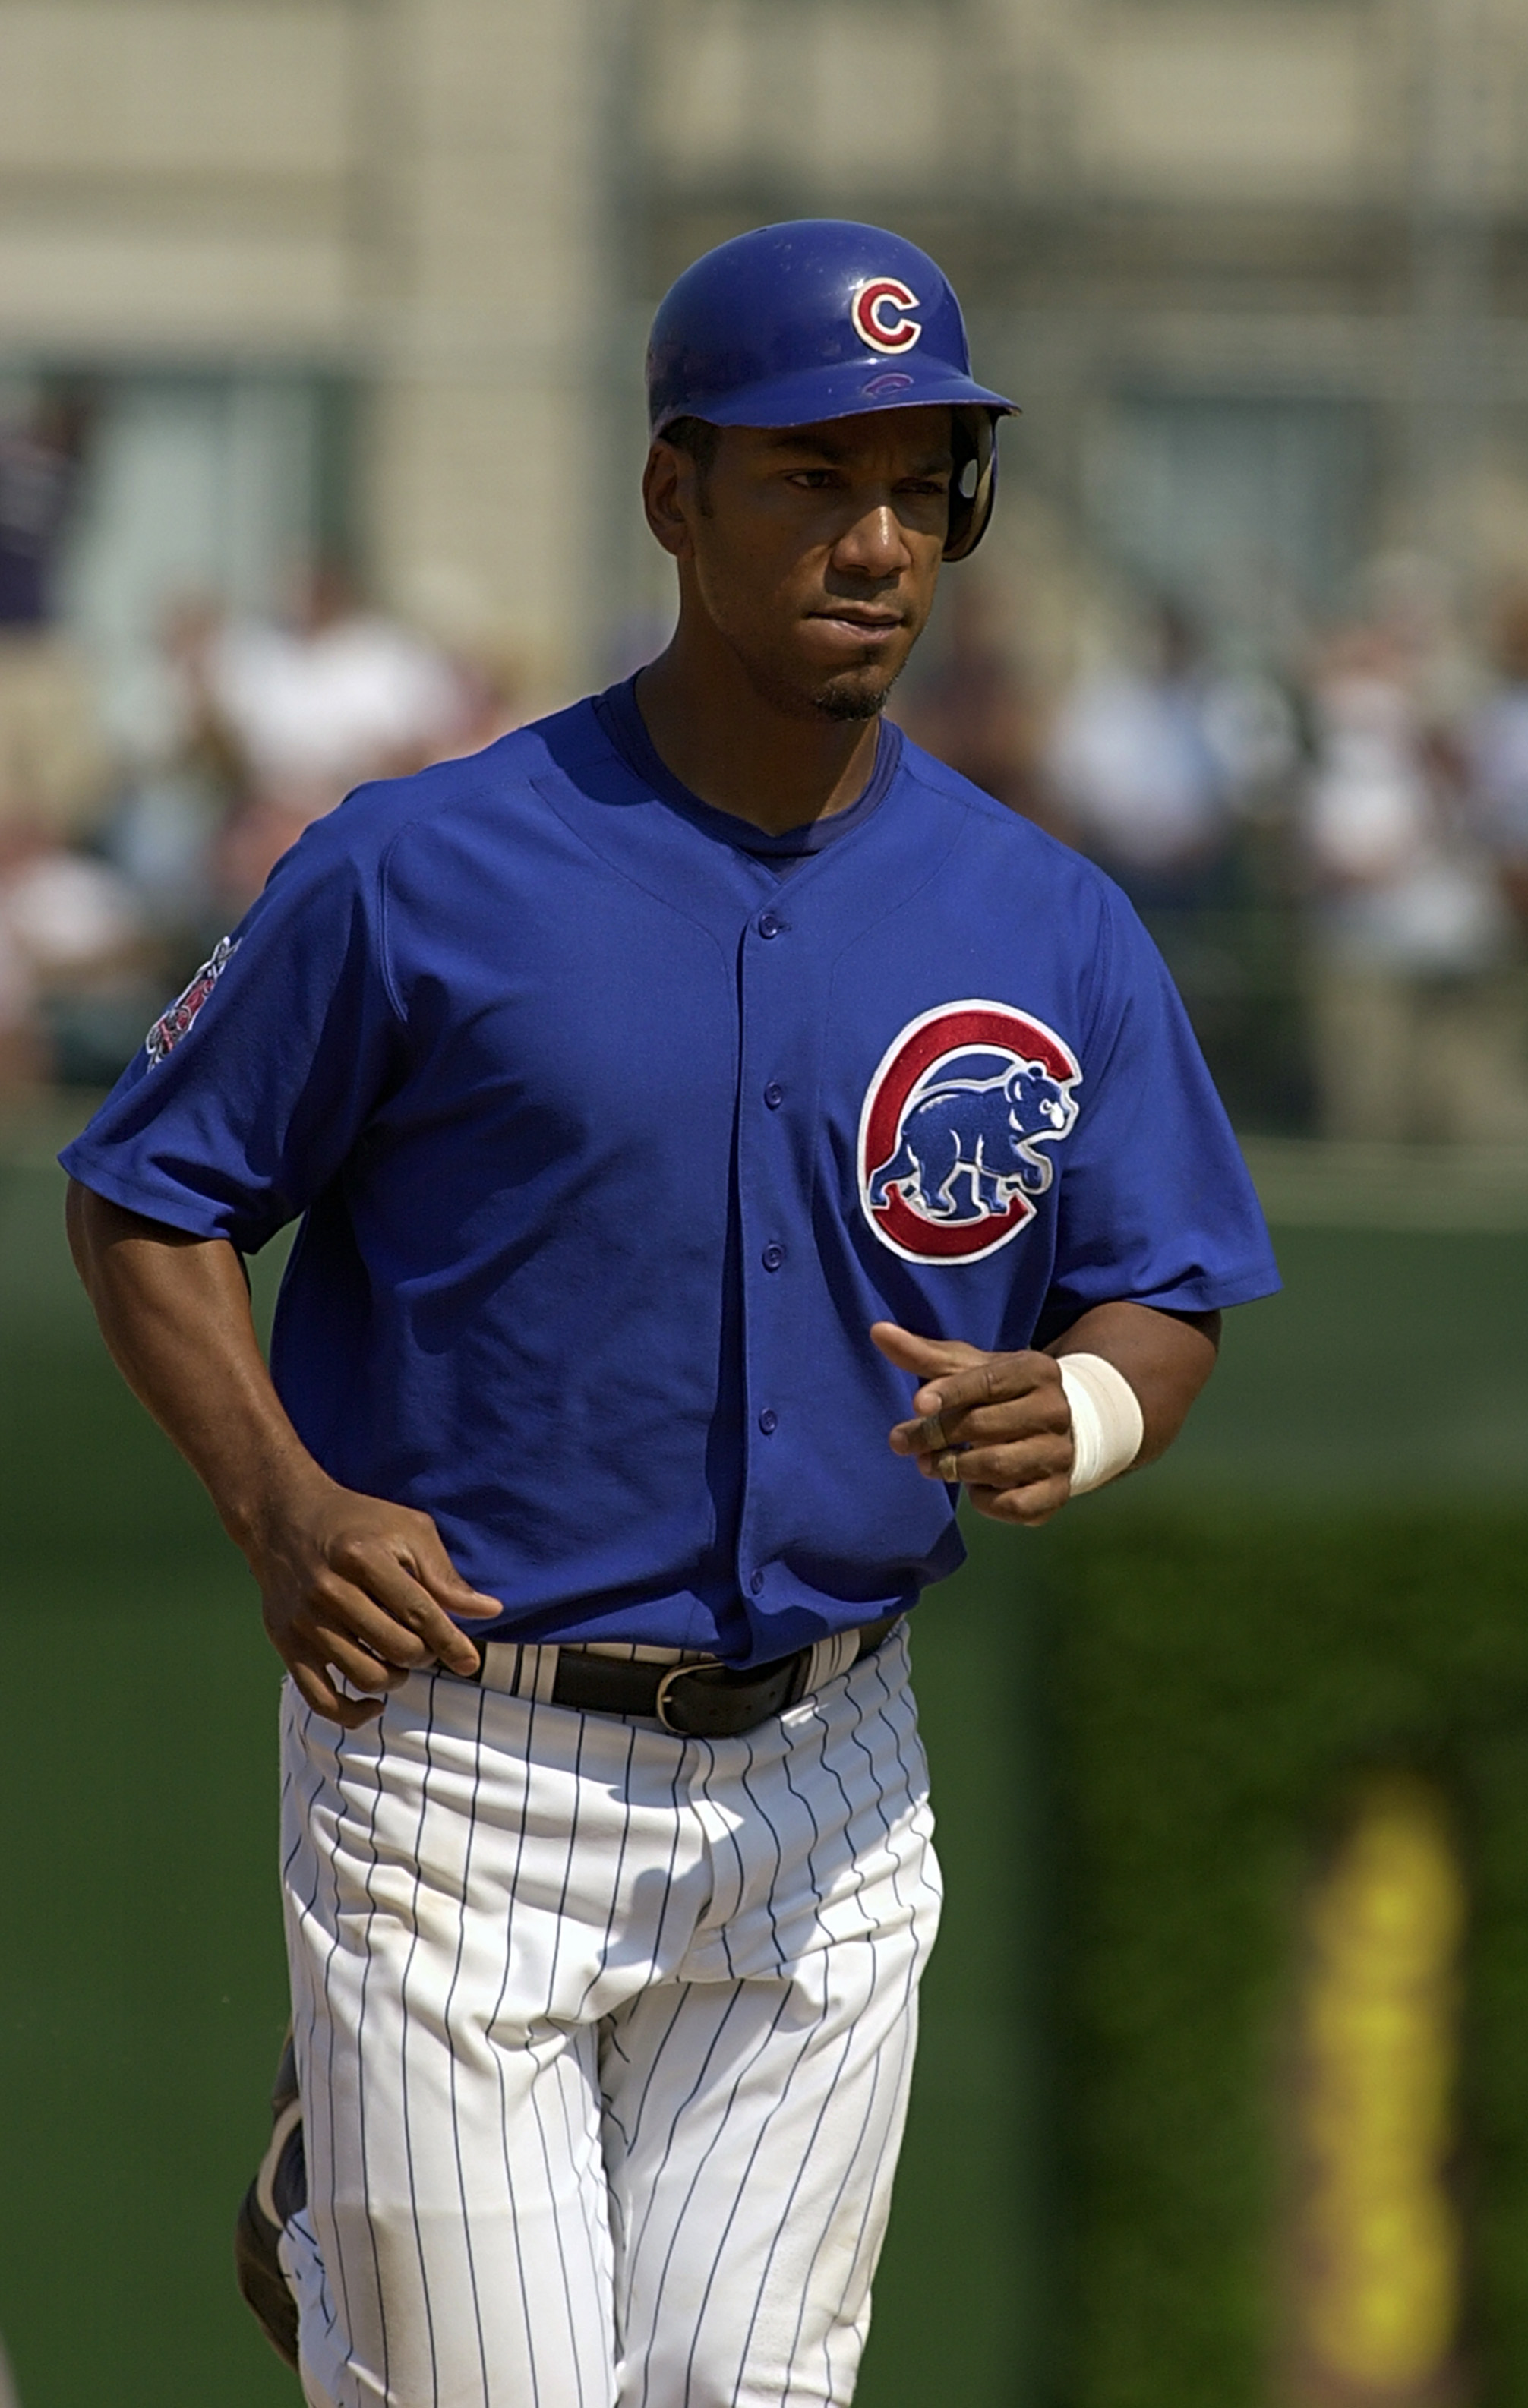 CHICAGO - APRIL 16: Third baseman Joe Crede #24 of the Chicago